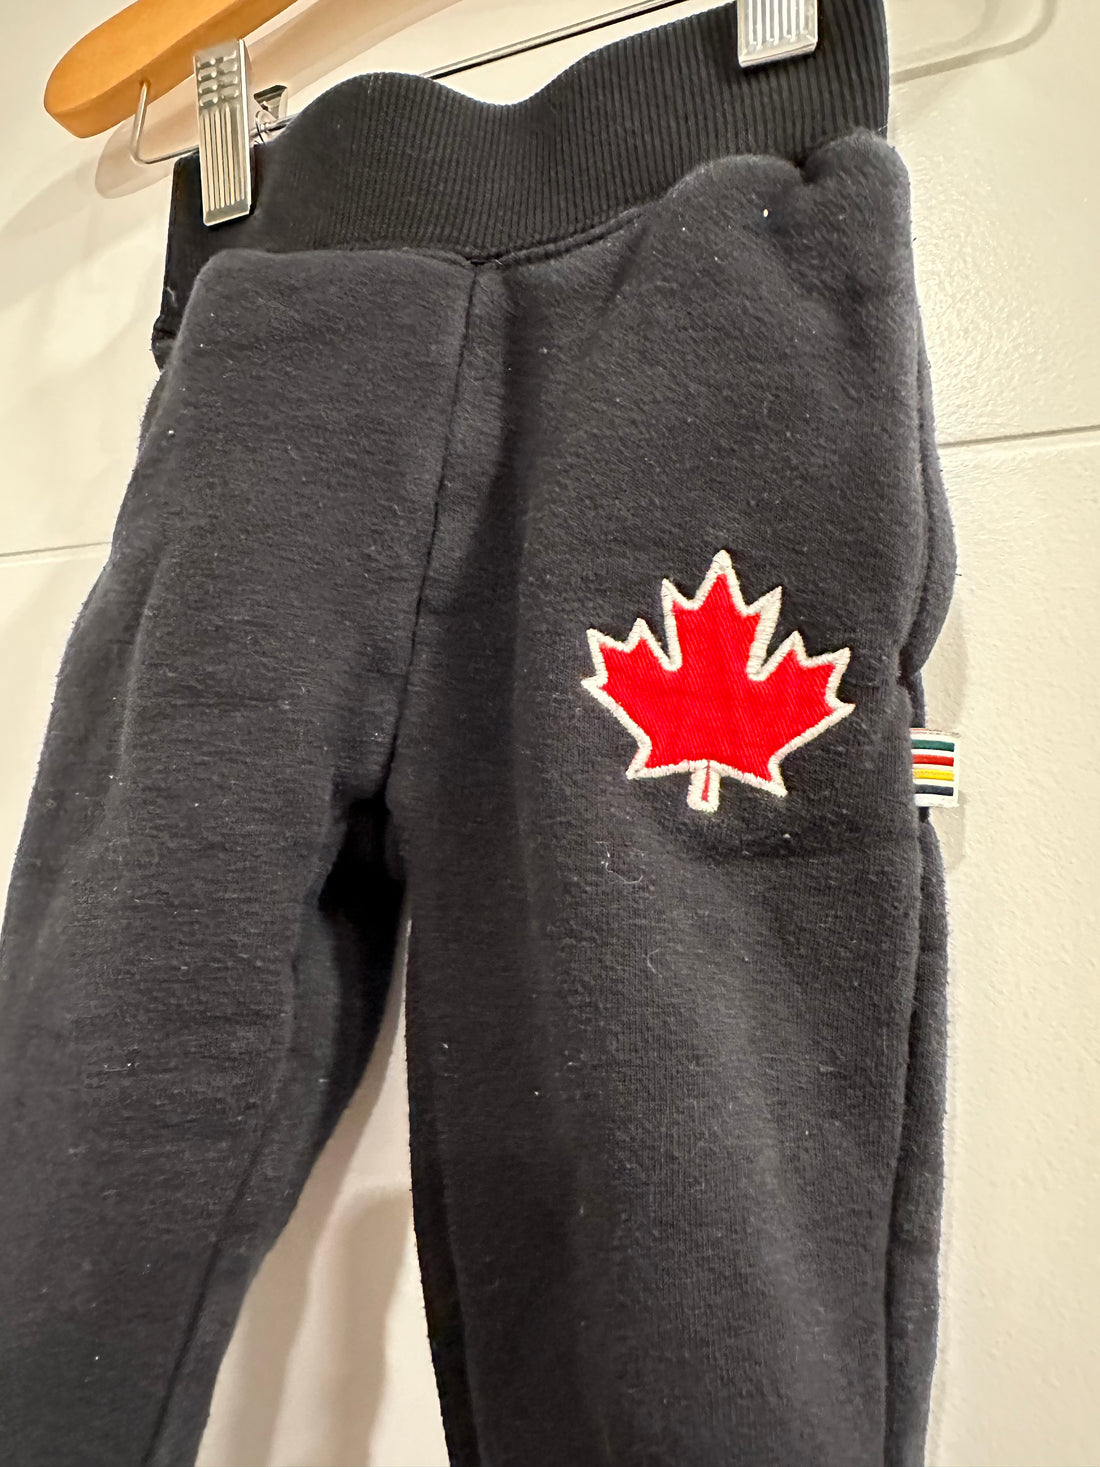 HBC Canada Pants 2-3Y